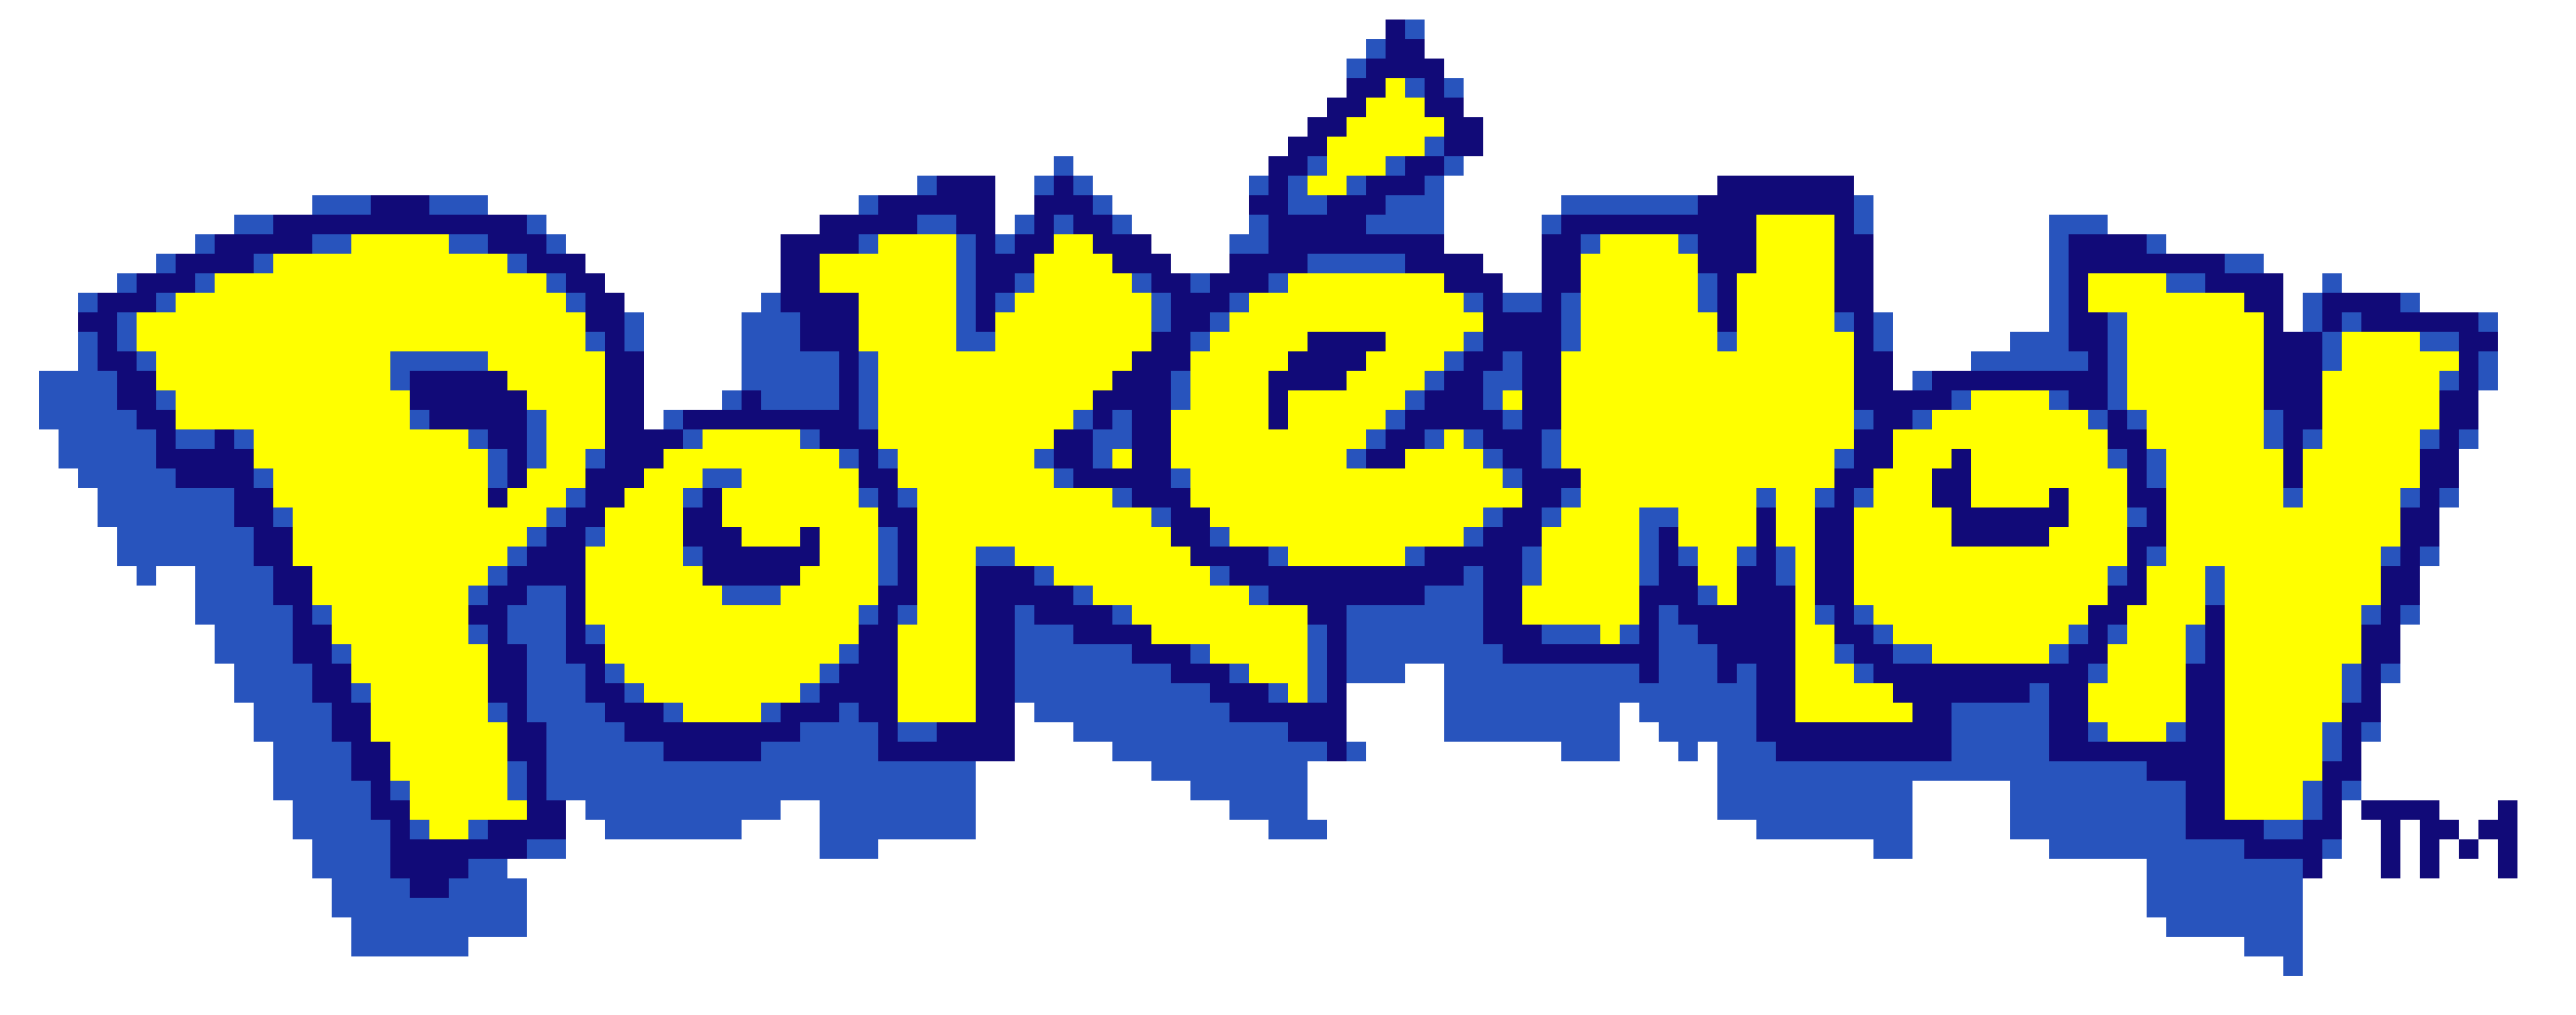 Pokémon Yellow Logo PNG Pic Background